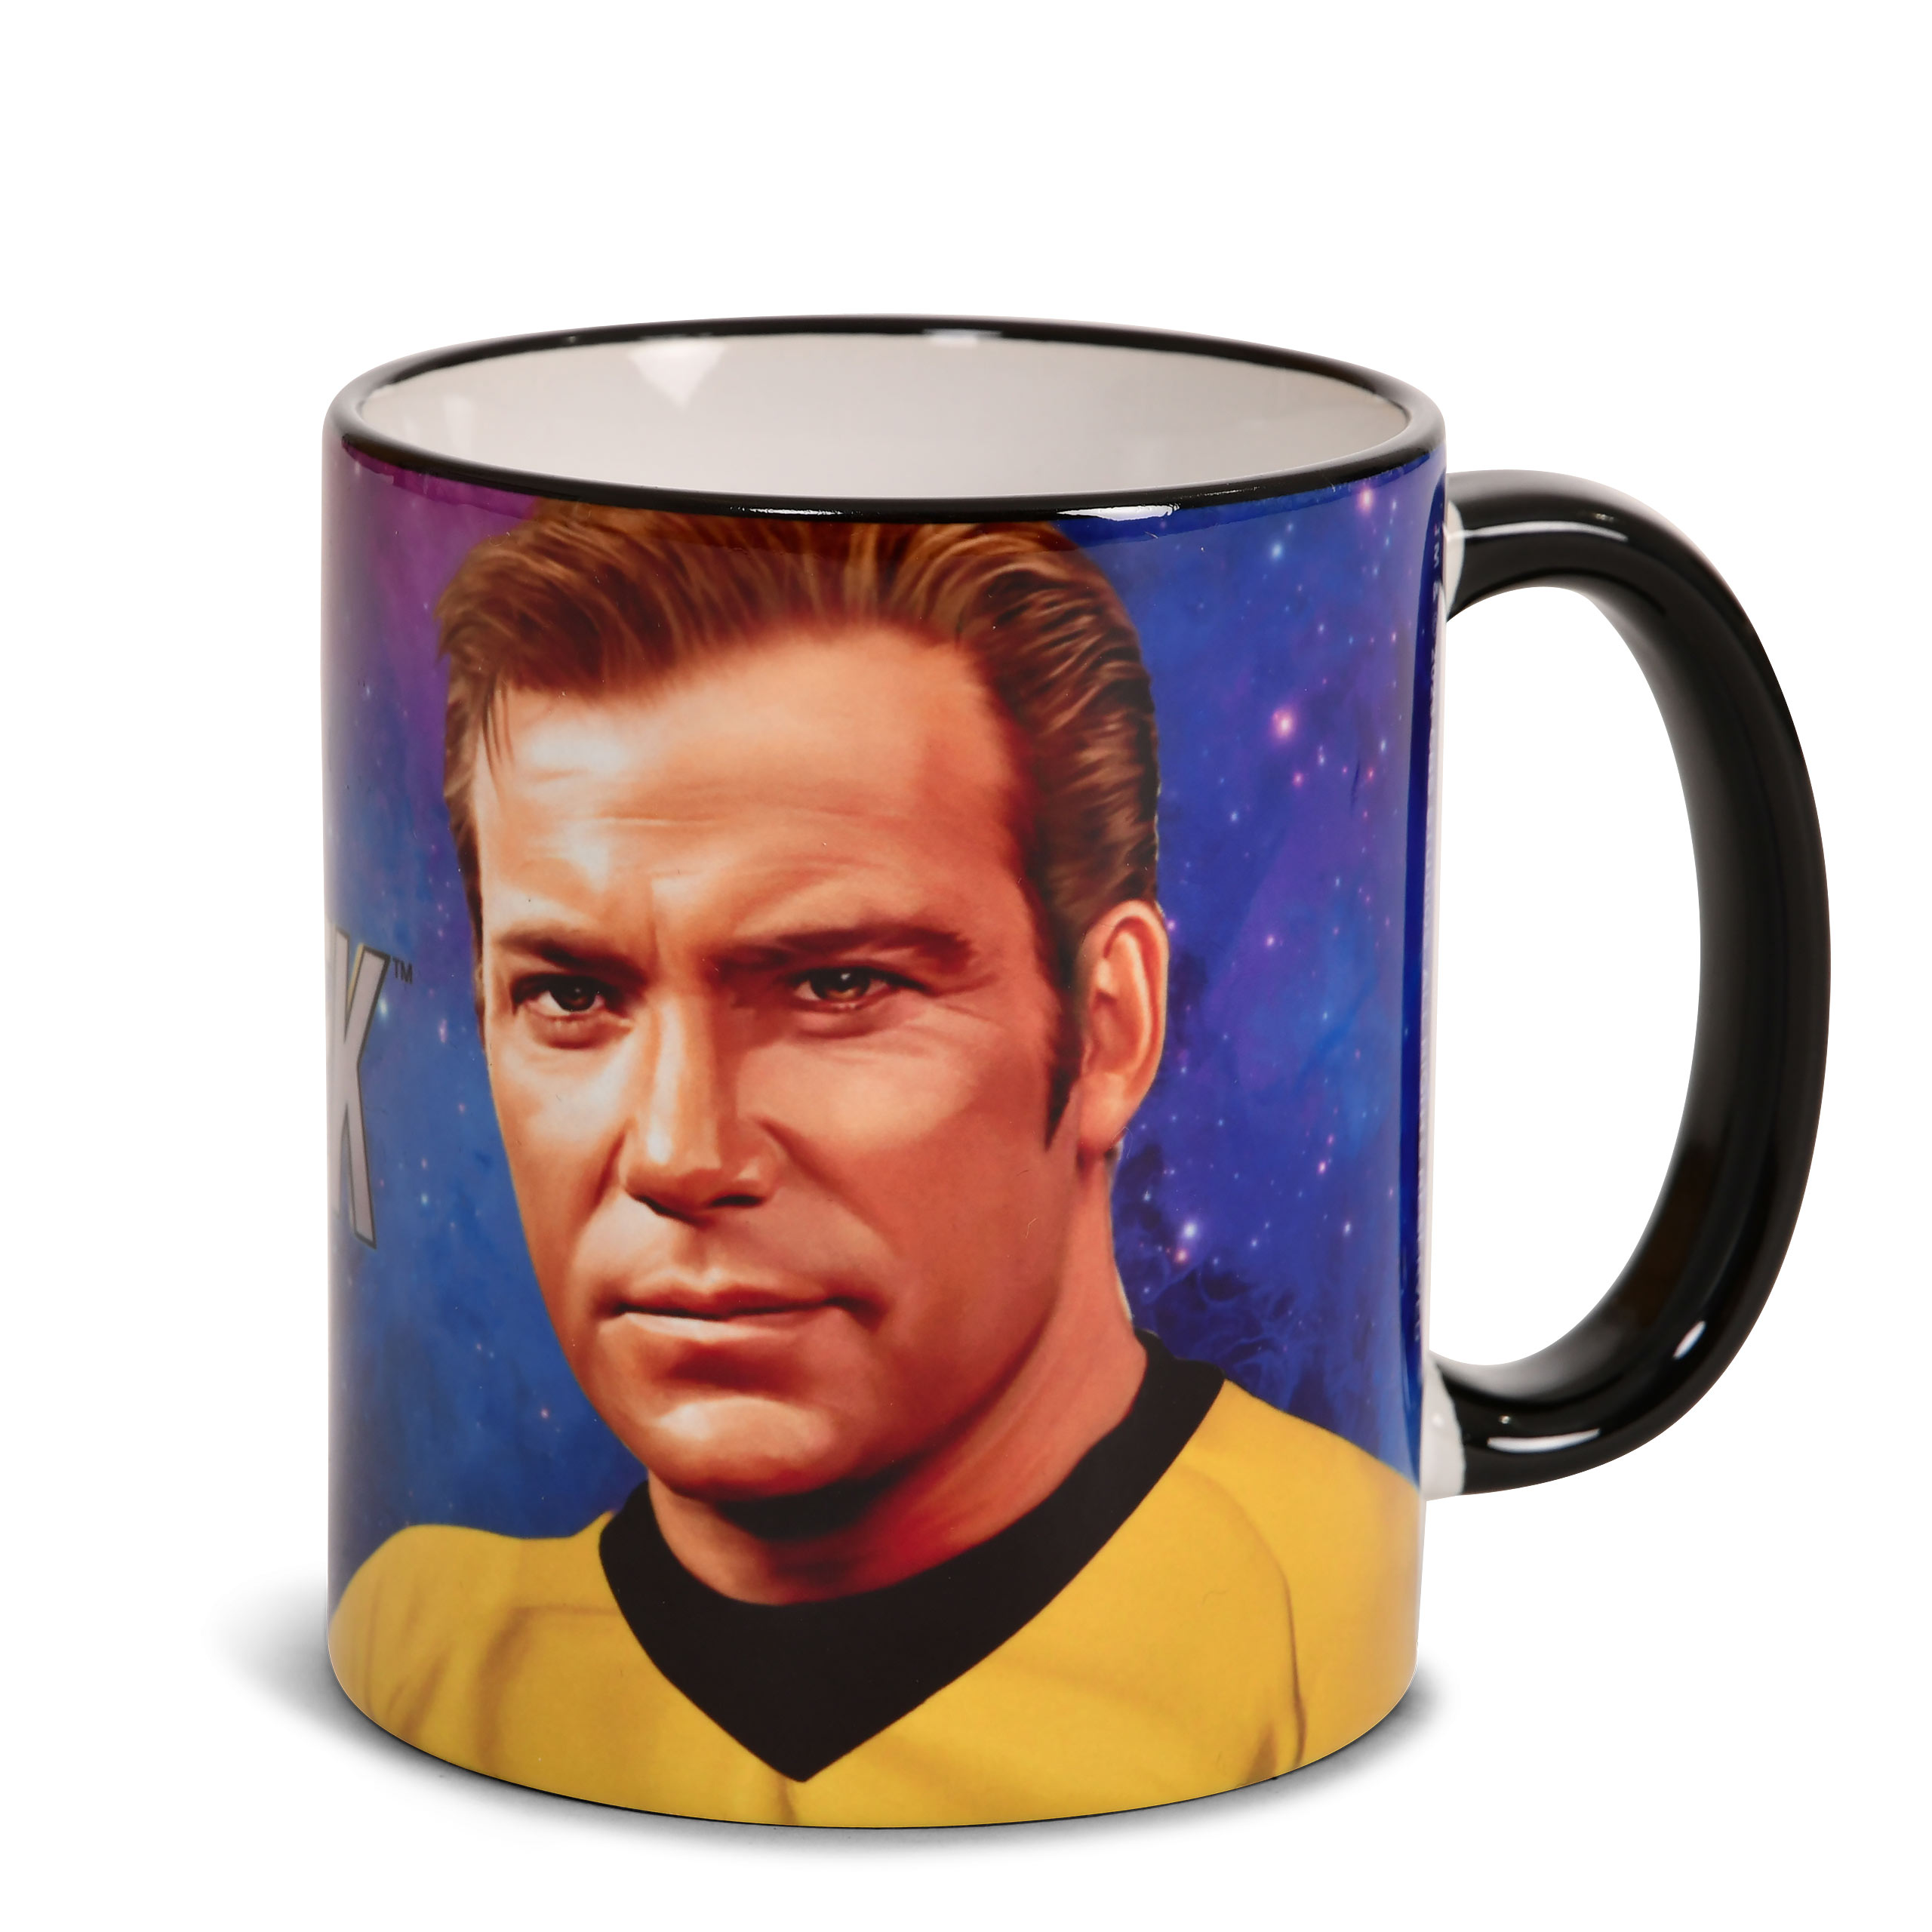 Star Trek - Tasse Capitaine Kirk